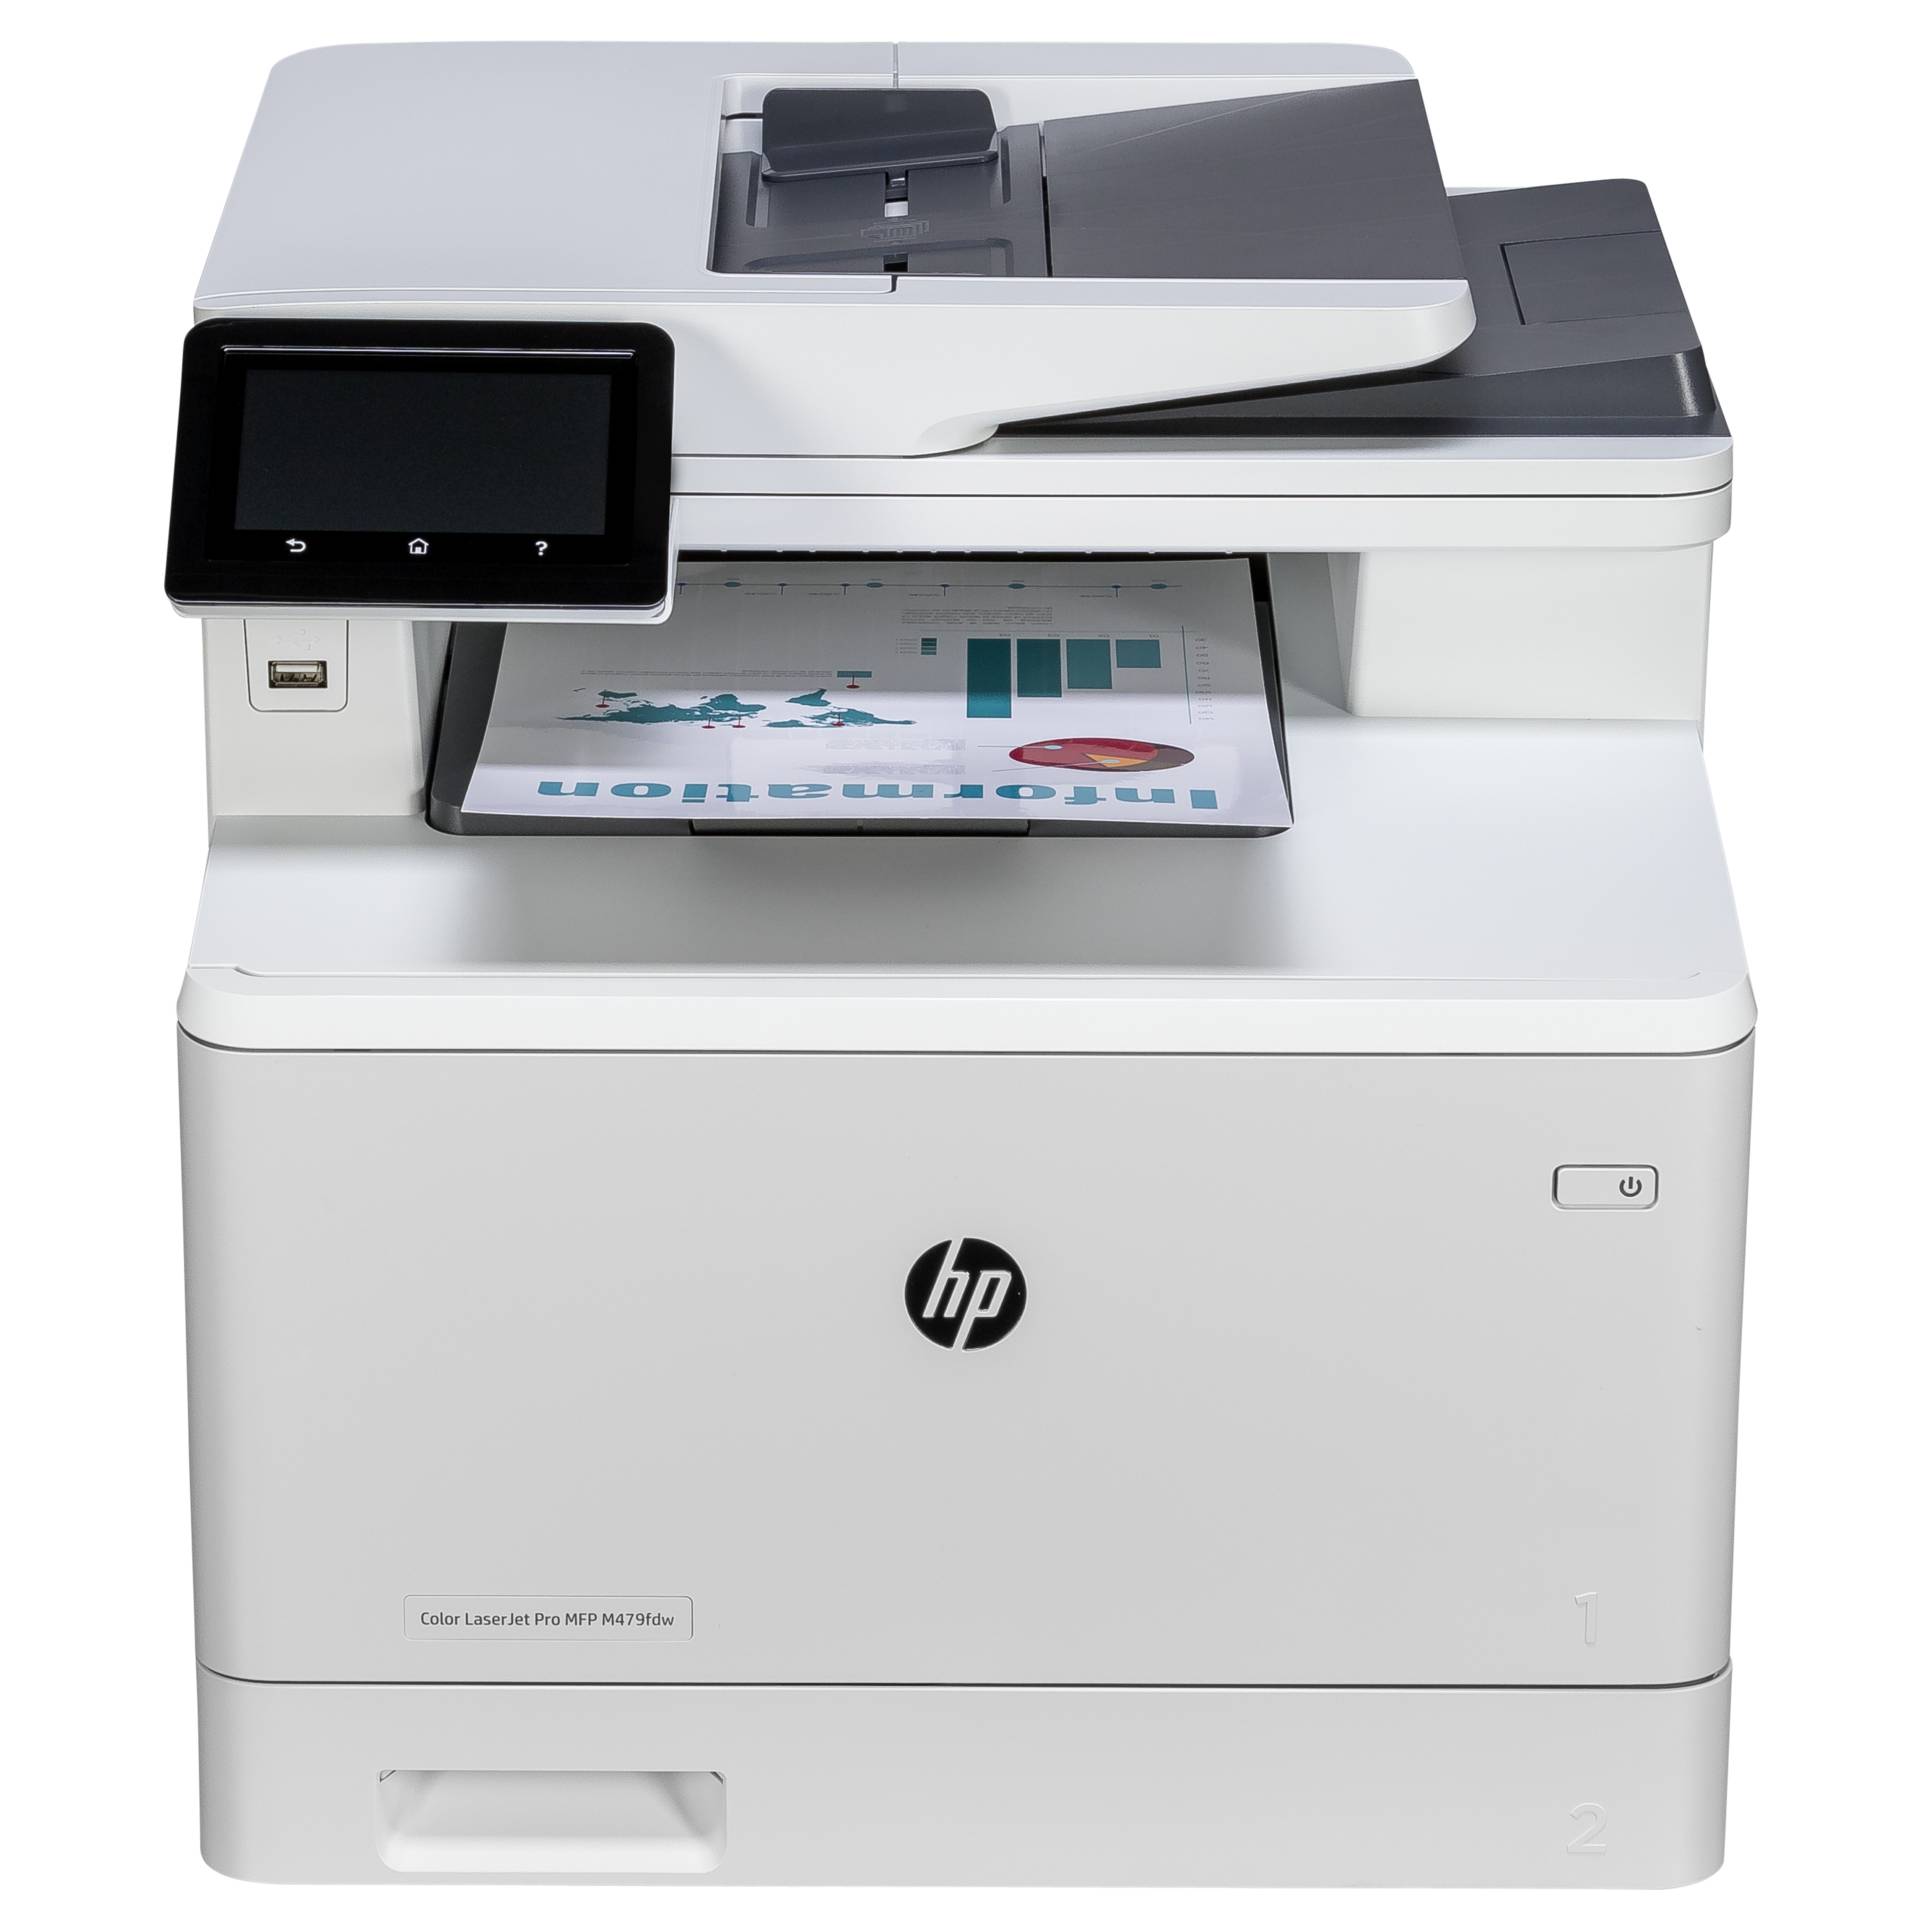 HP Color LaserJet Pro MFP M479fdw, WLAN, Laser, mehrfarbig- Multifunktionsgerät, Drucker/Scanner/Kopierer/Fax